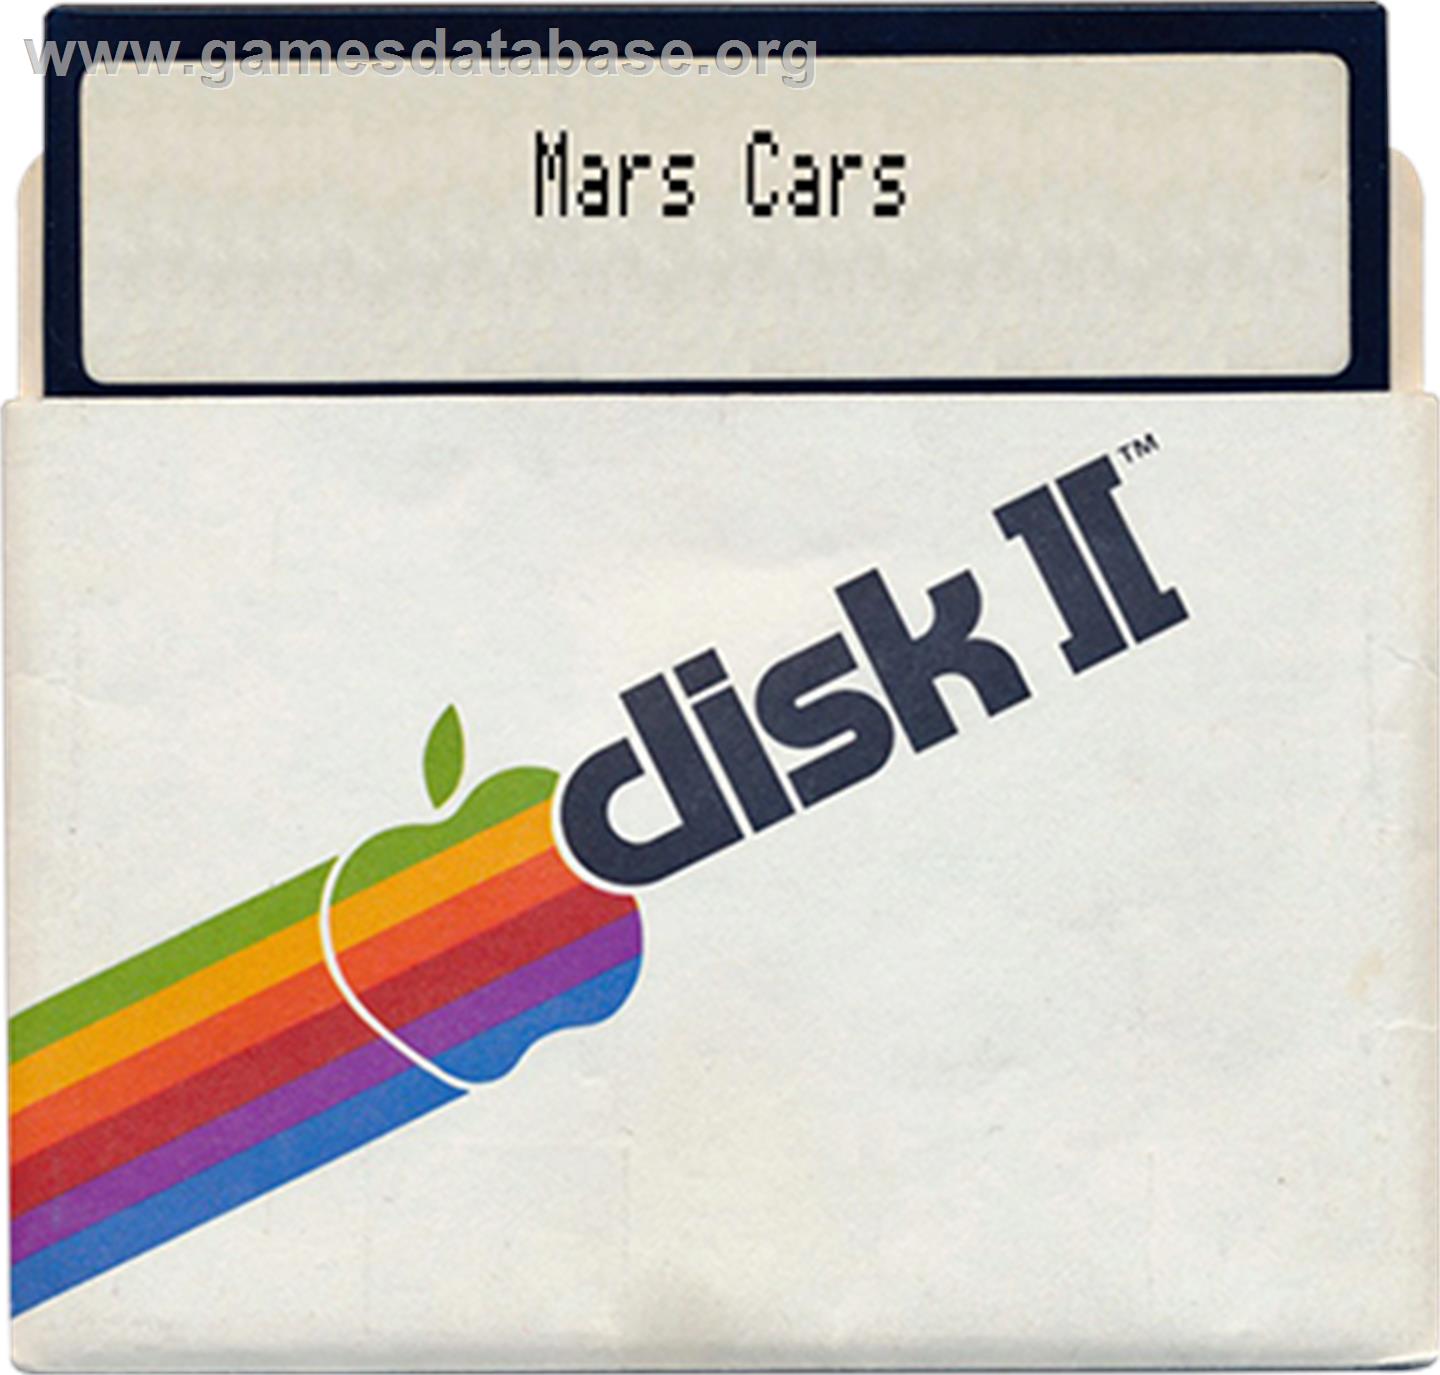 Mars Cars - Apple II - Artwork - Disc